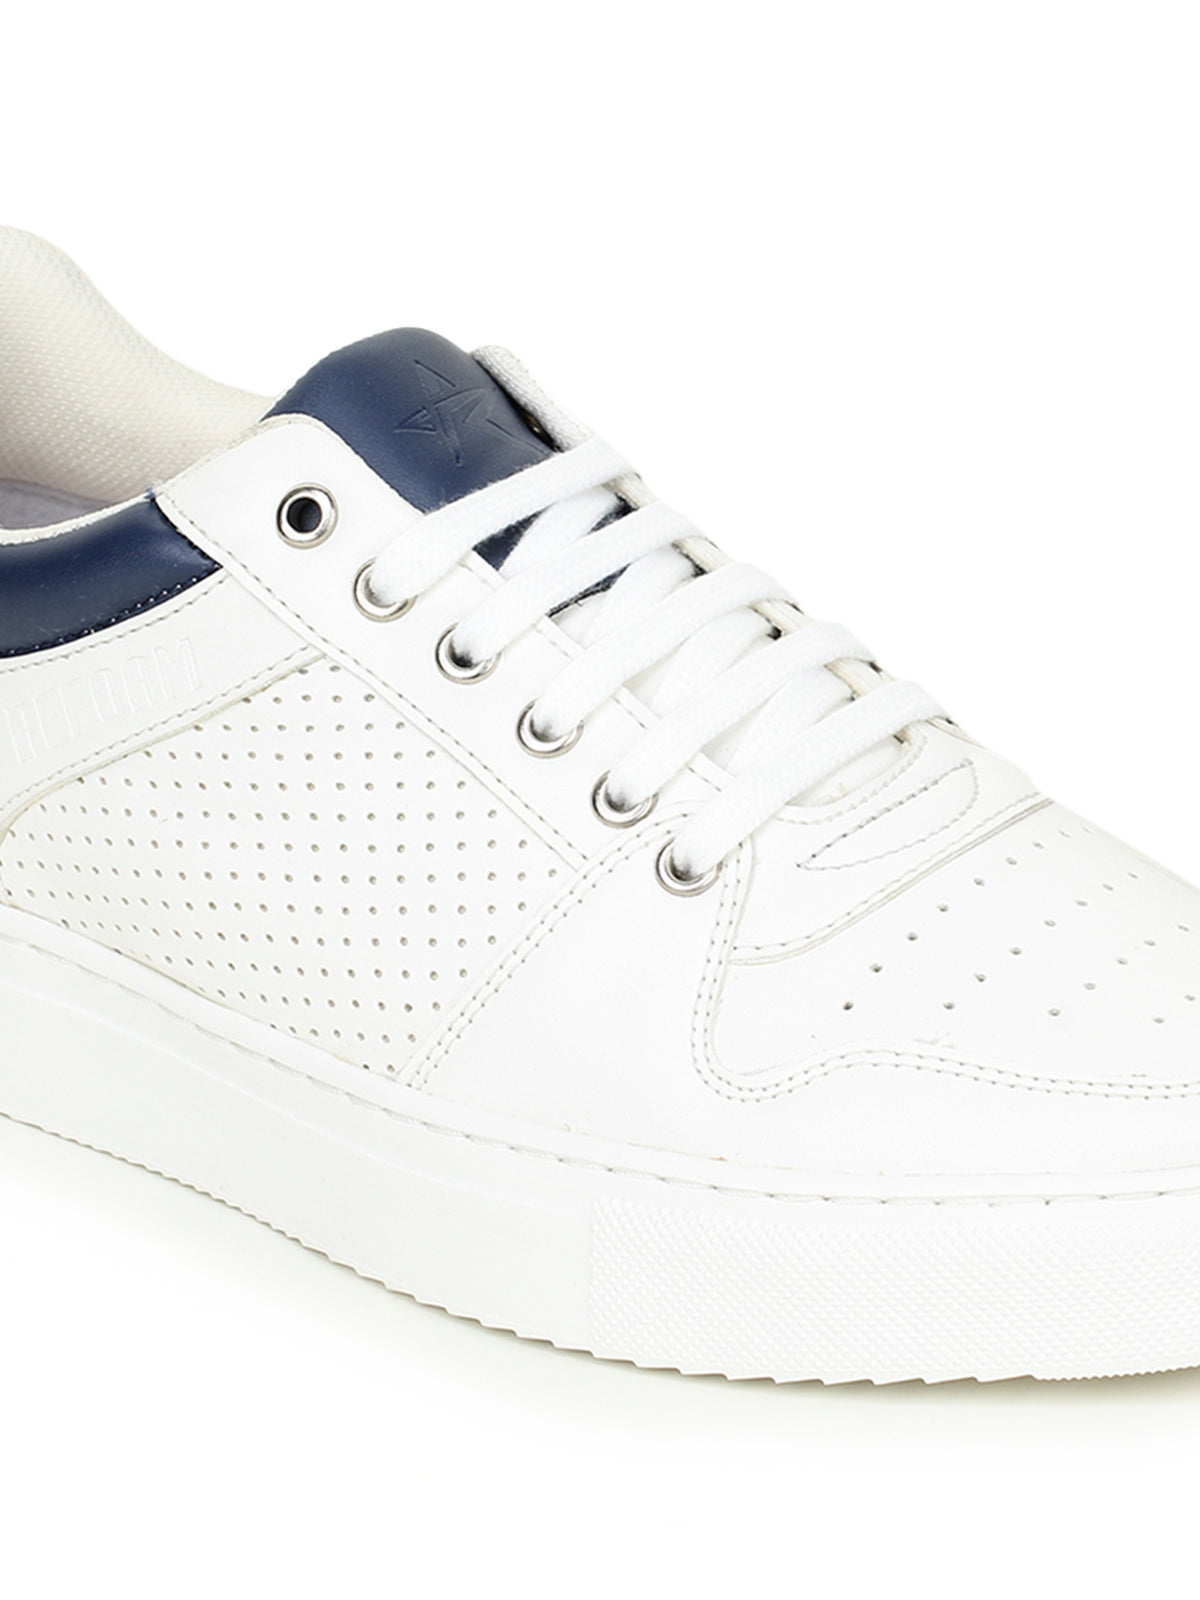 Buy Men White Casual Sneakers Online | SKU: 71-8616-16-40-Metro Shoes